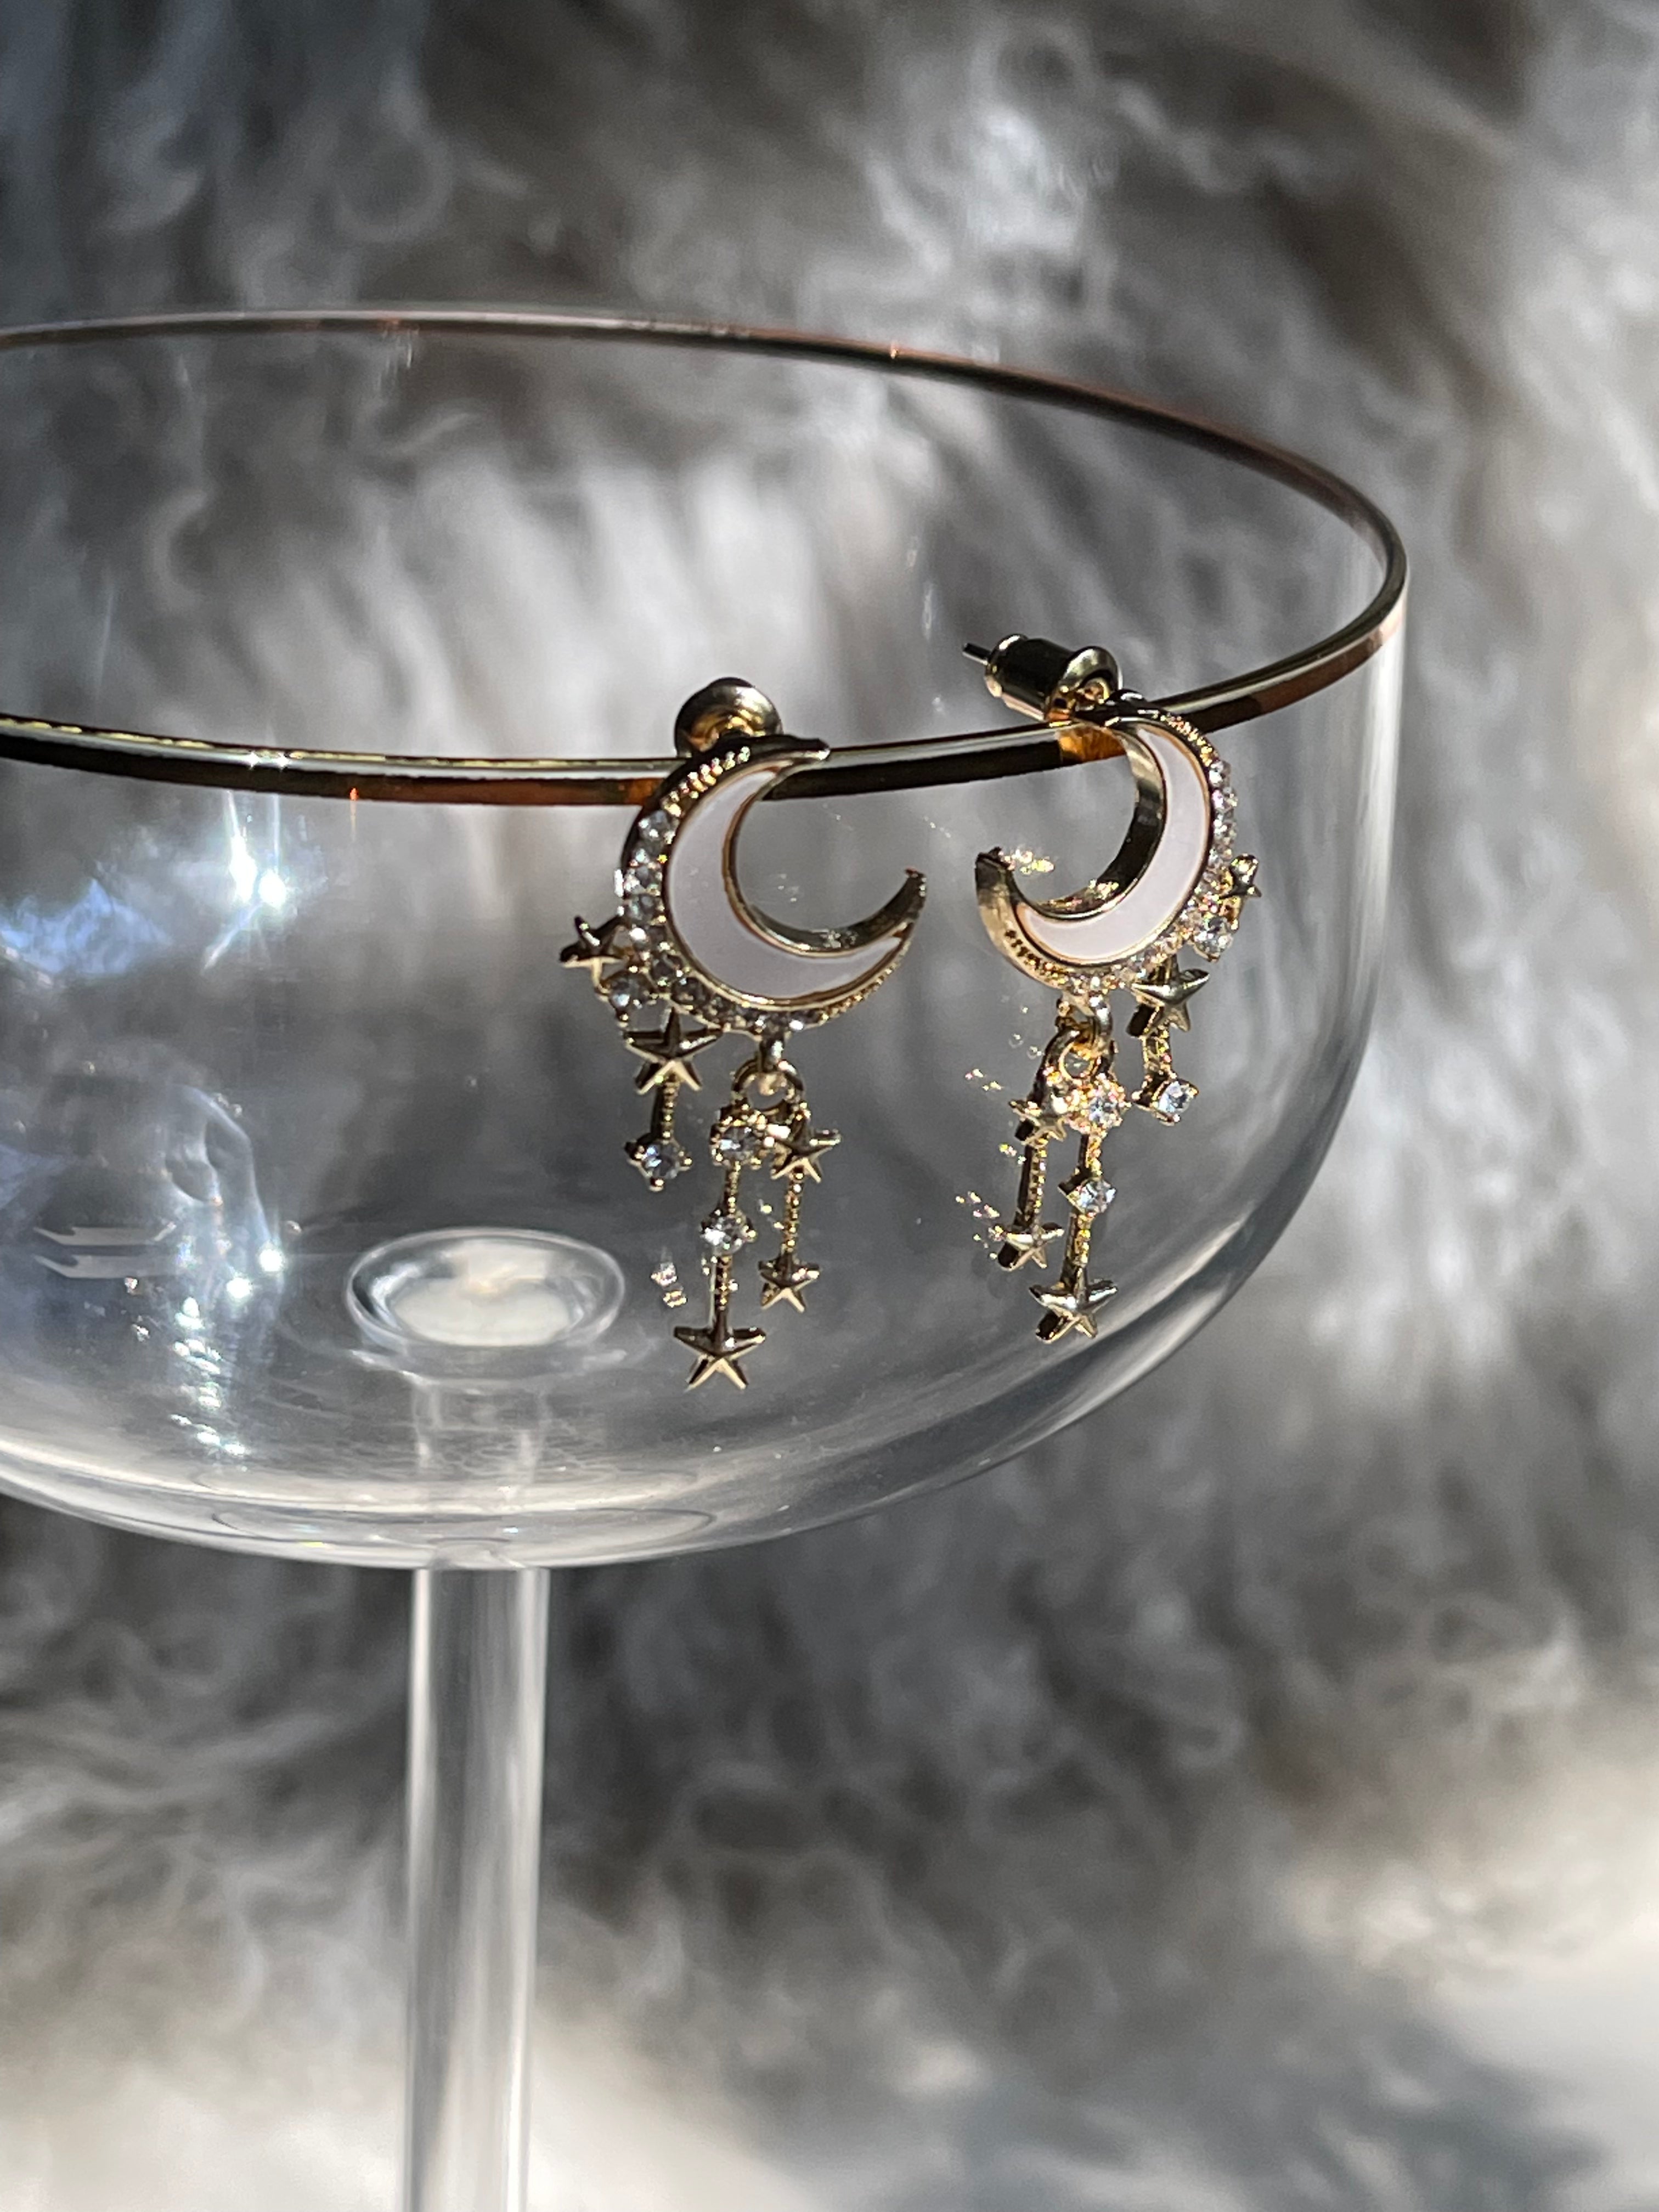 Celestial Style Moon Earrings, Moon & Star Crystal Cute Earrings ~ Caelum